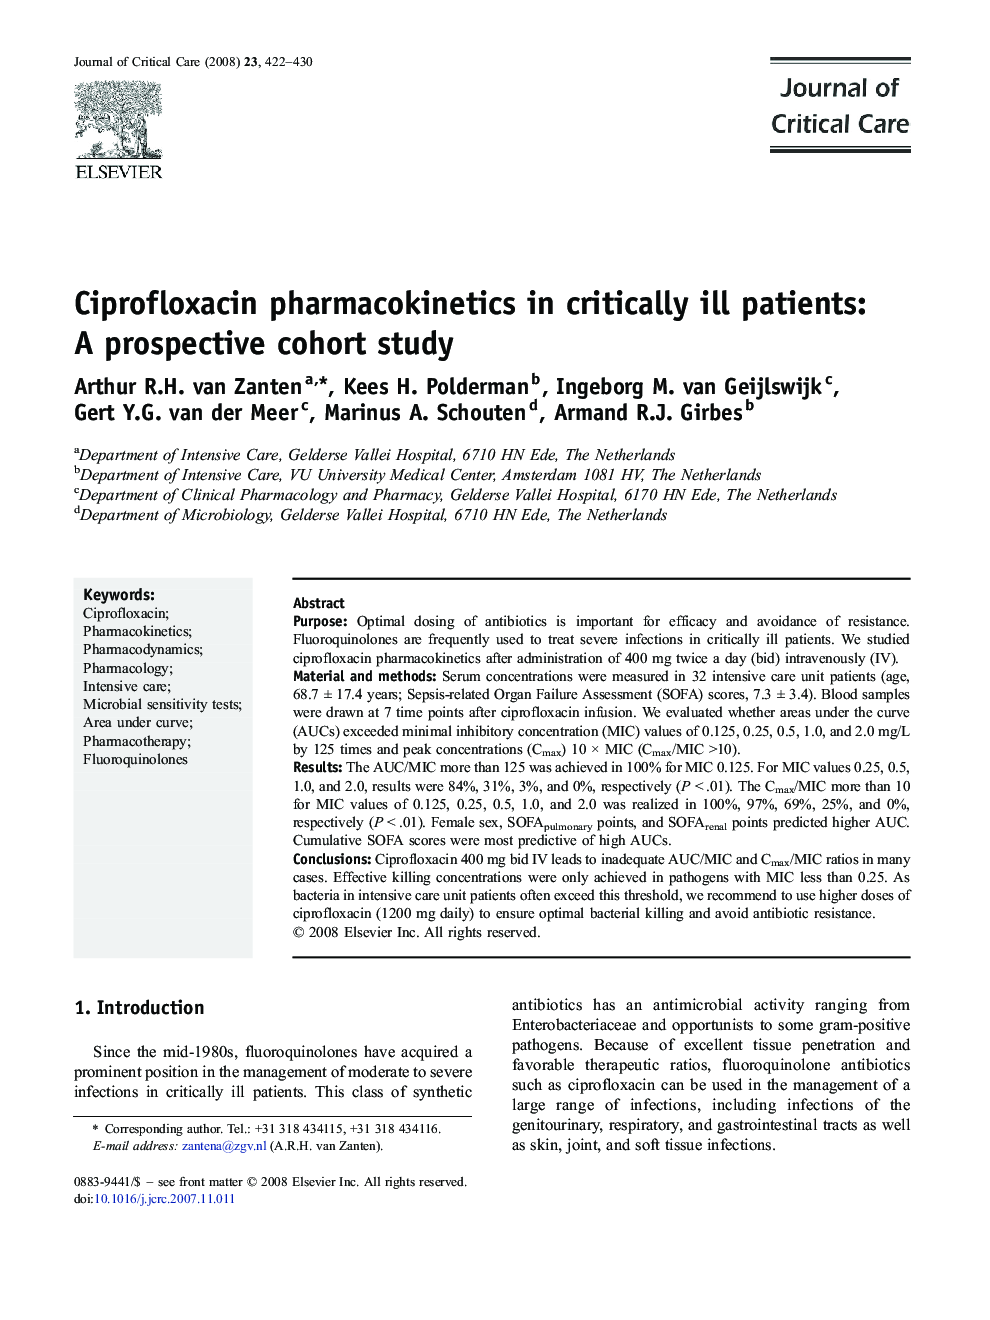 Ciprofloxacin pharmacokinetics in critically ill patients: A prospective cohort study